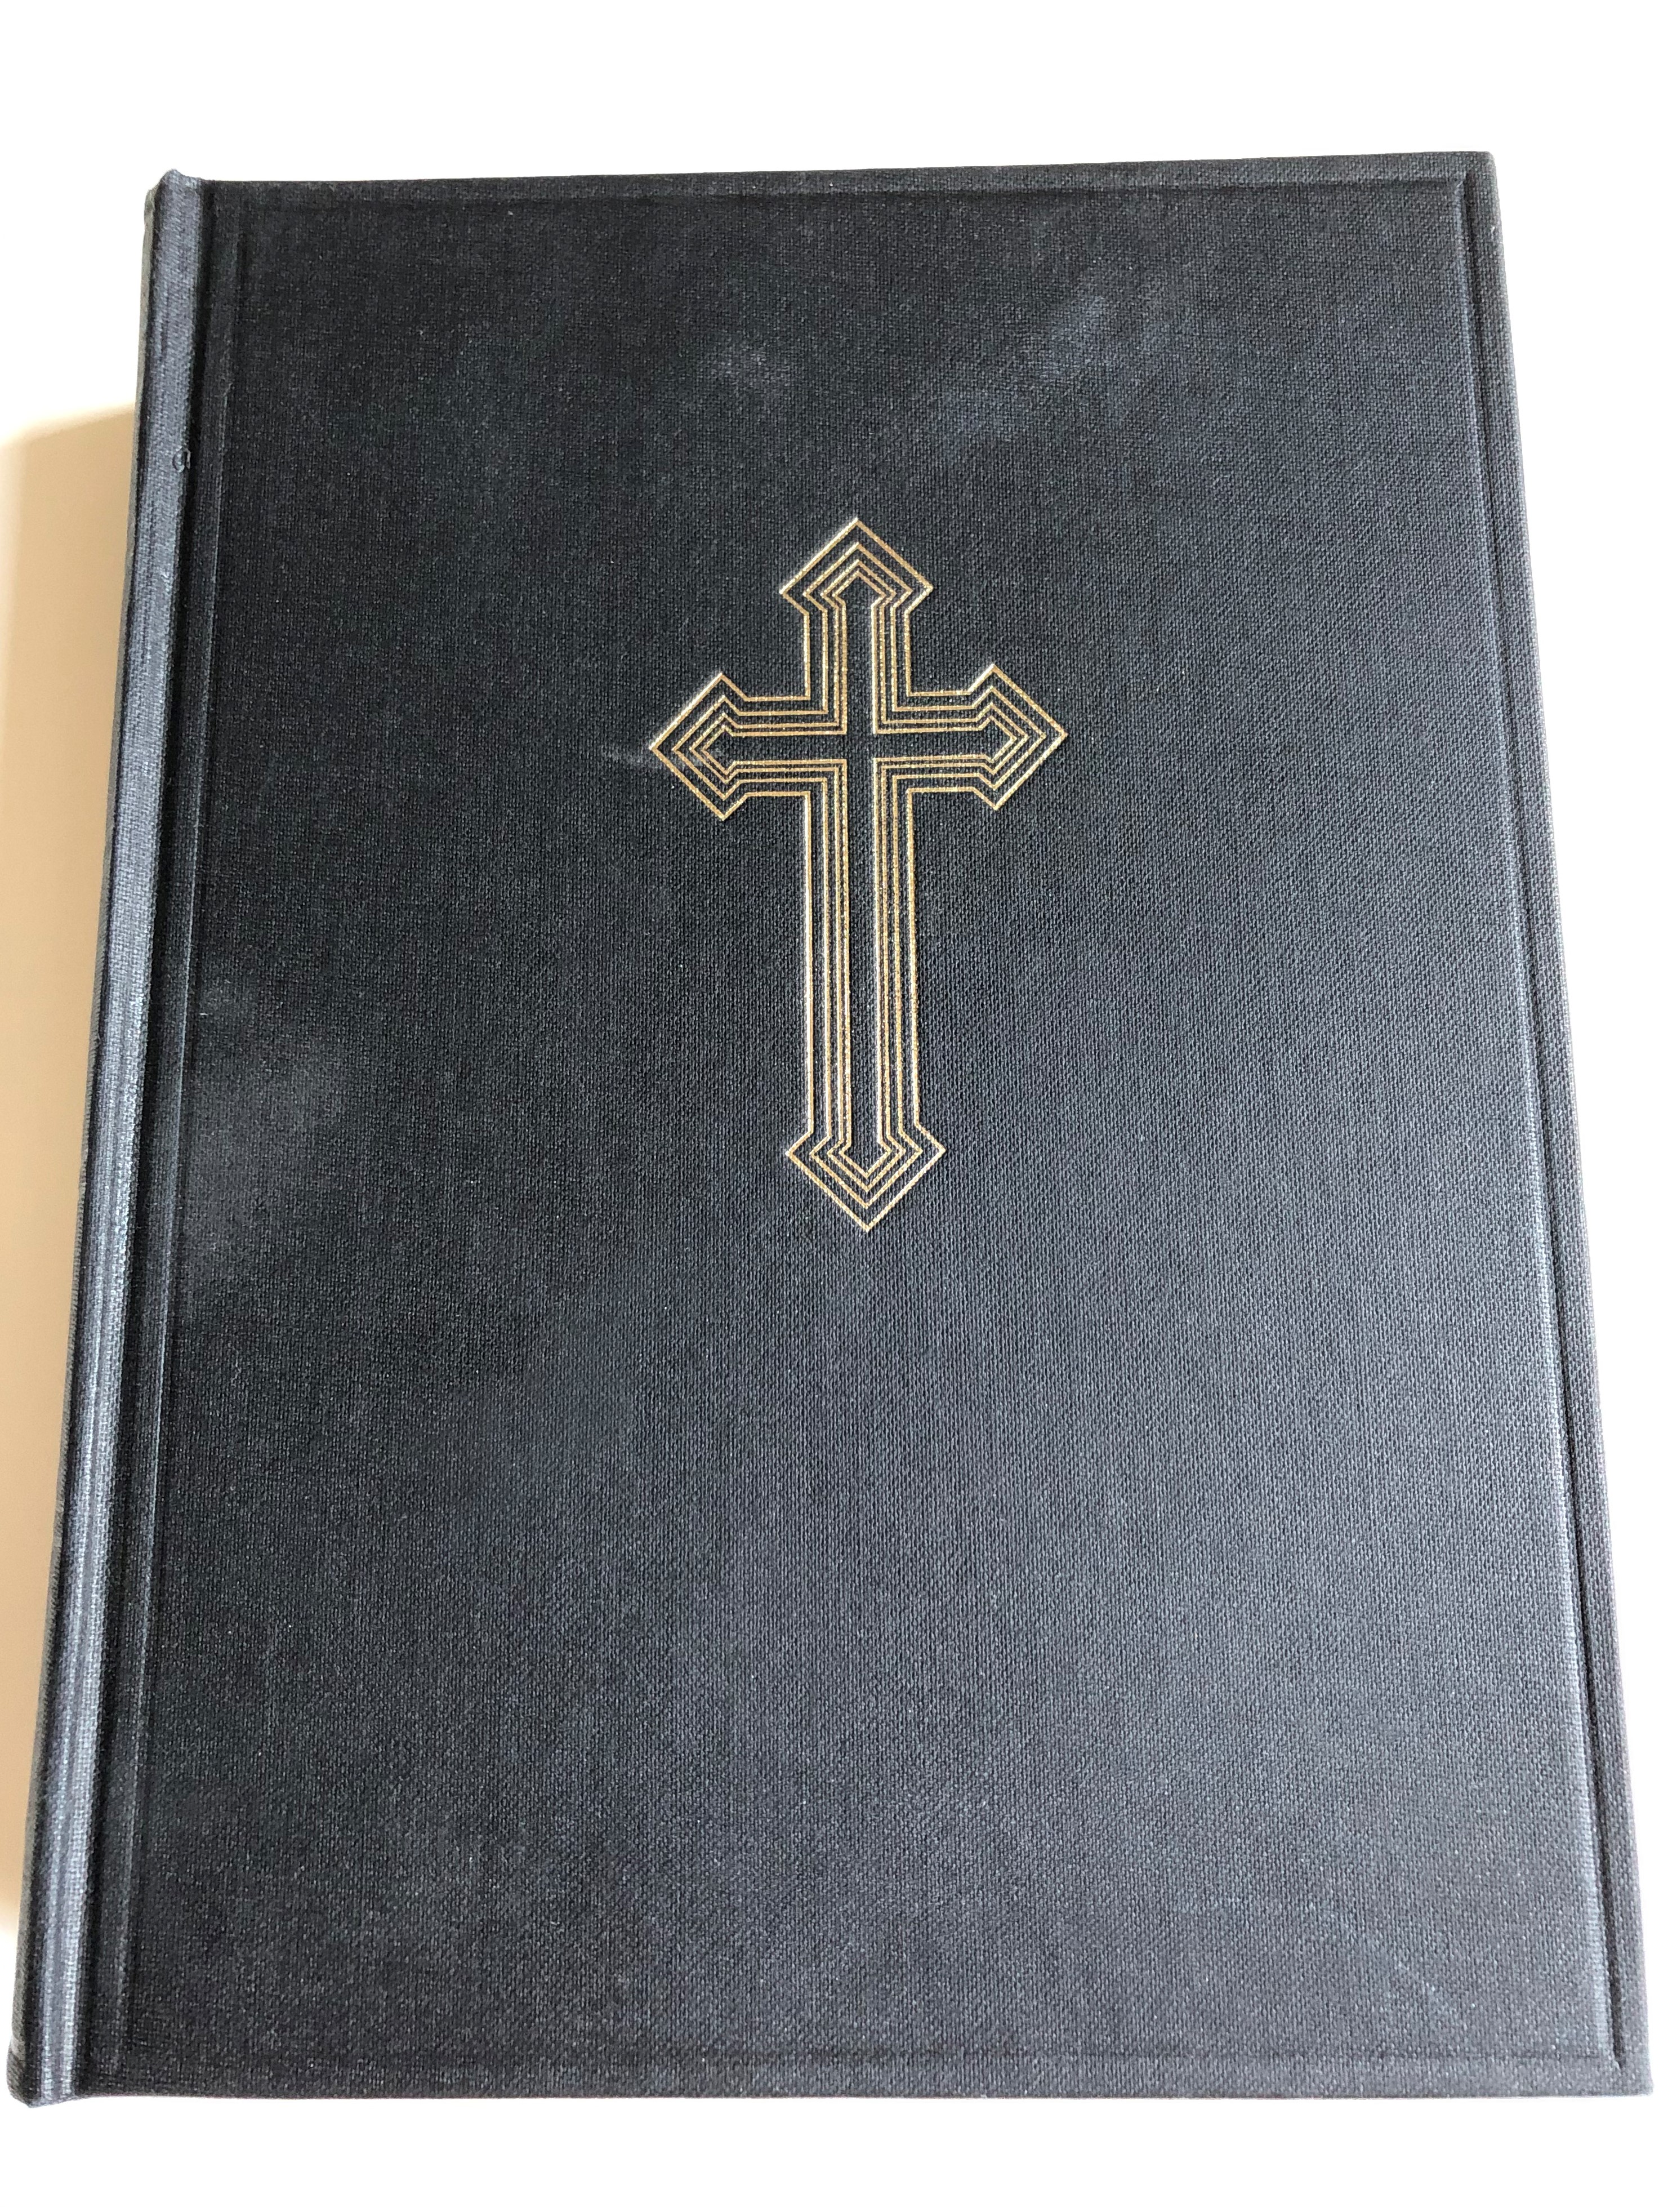 new-testament-in-slavonic-large-wide-margin-1hardcover-red-page-edges-united-bible-societies-1959-edition-church-slavonic-crkveno-slovenski-novi-zavet.jpg